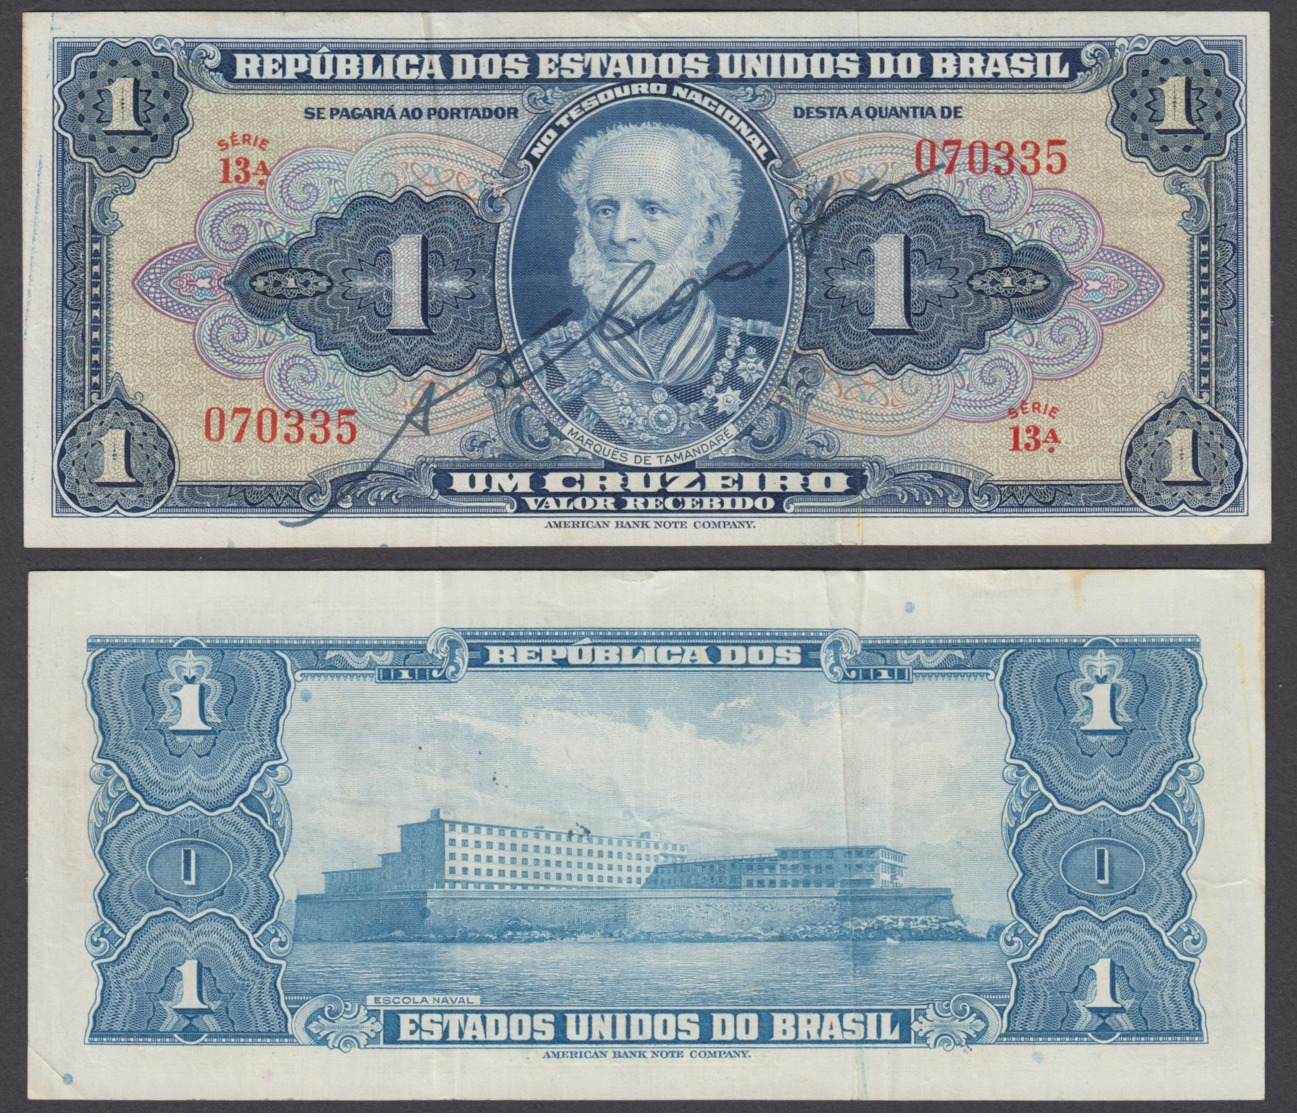 Brazil 1 Cruzeiro ND 1944 (VF+) Condition Banknote P-132 Series 13A - Brazil